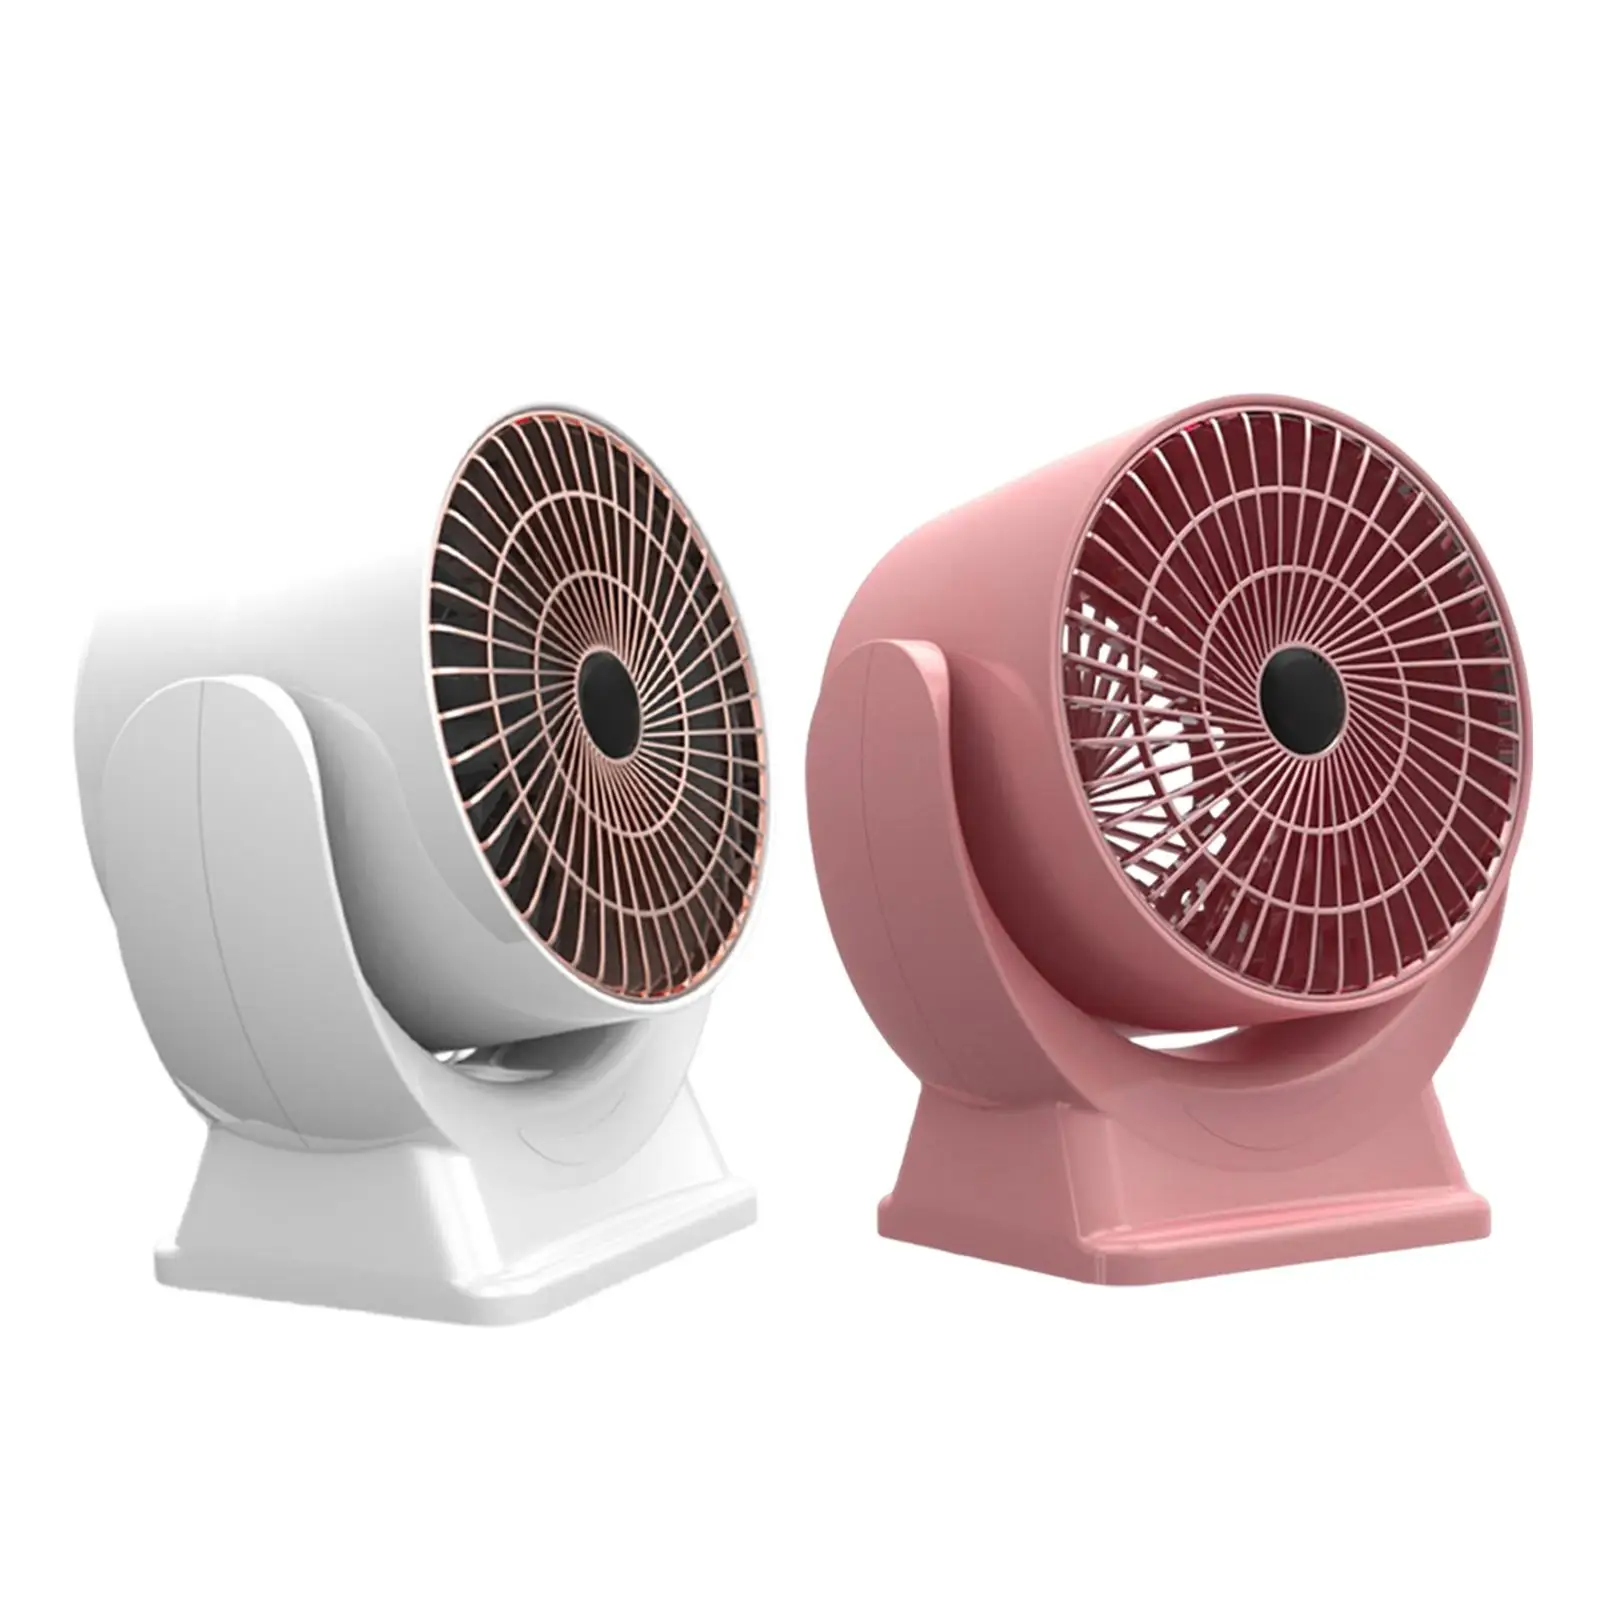 

Tabletop Heater Heating Tool Desktop Fast Heating Quiet Fan Heaters Air Warmer for Home Office Dorm Adults Kids